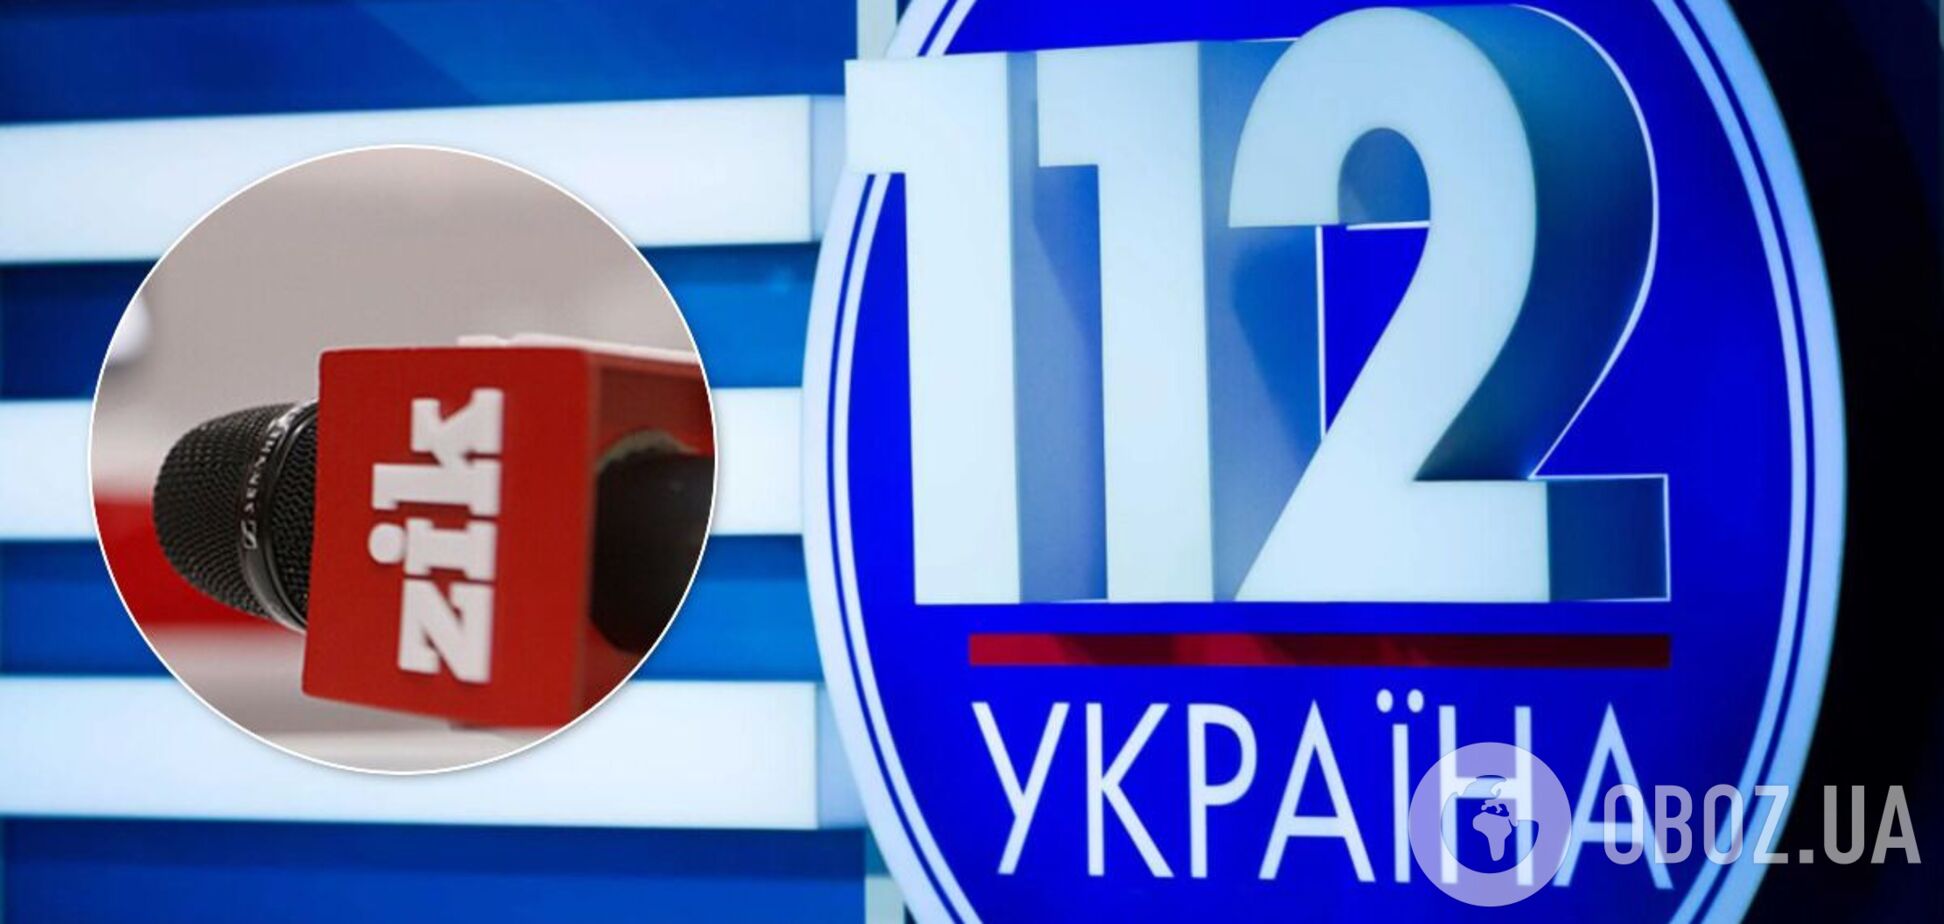 Телеканалы 112 Украина и ZIK